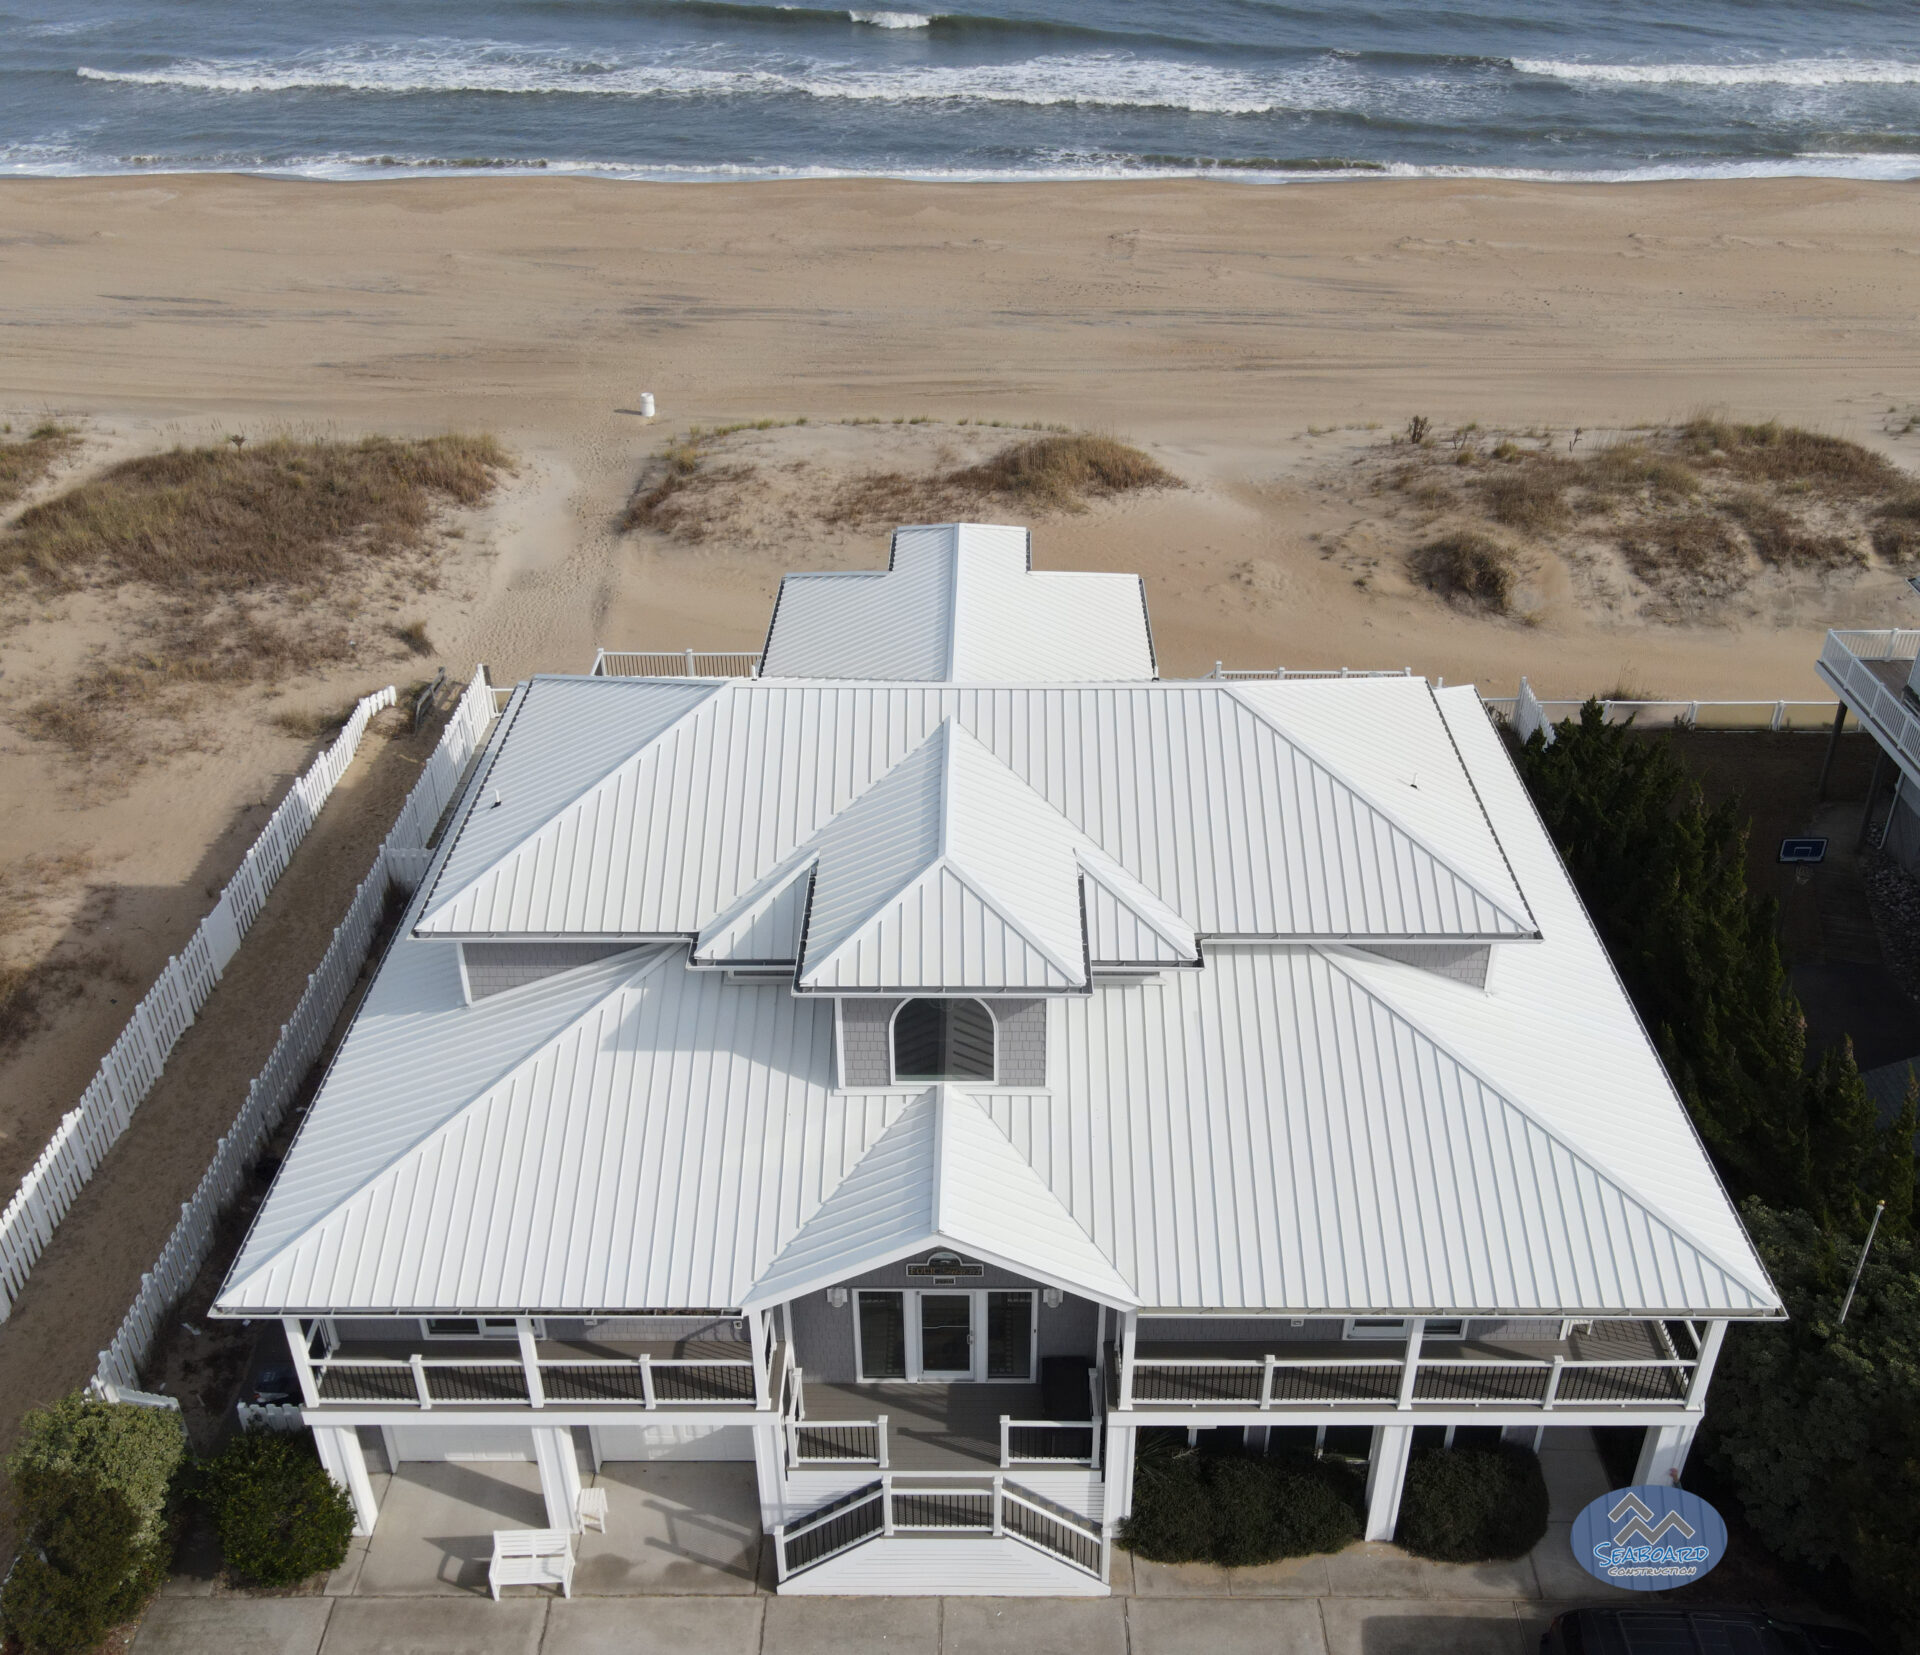 Metal roofing company serving Chesapeake, Norfolk, VIrginia Beach and all of Hampton Roads, Virginia